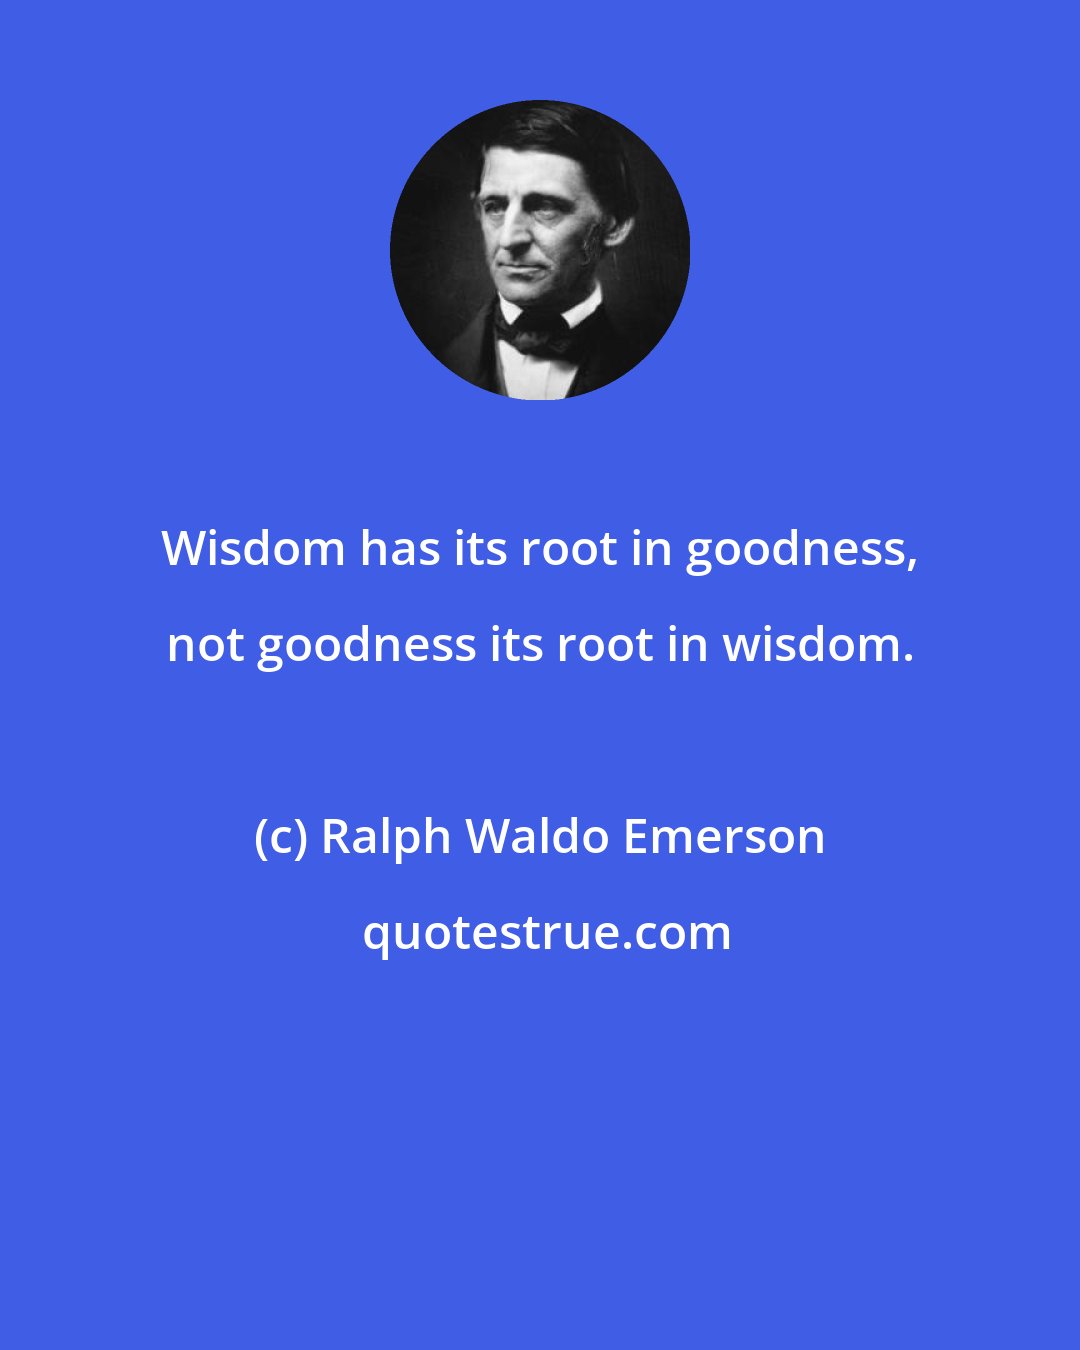 Ralph Waldo Emerson: Wisdom has its root in goodness, not goodness its root in wisdom.